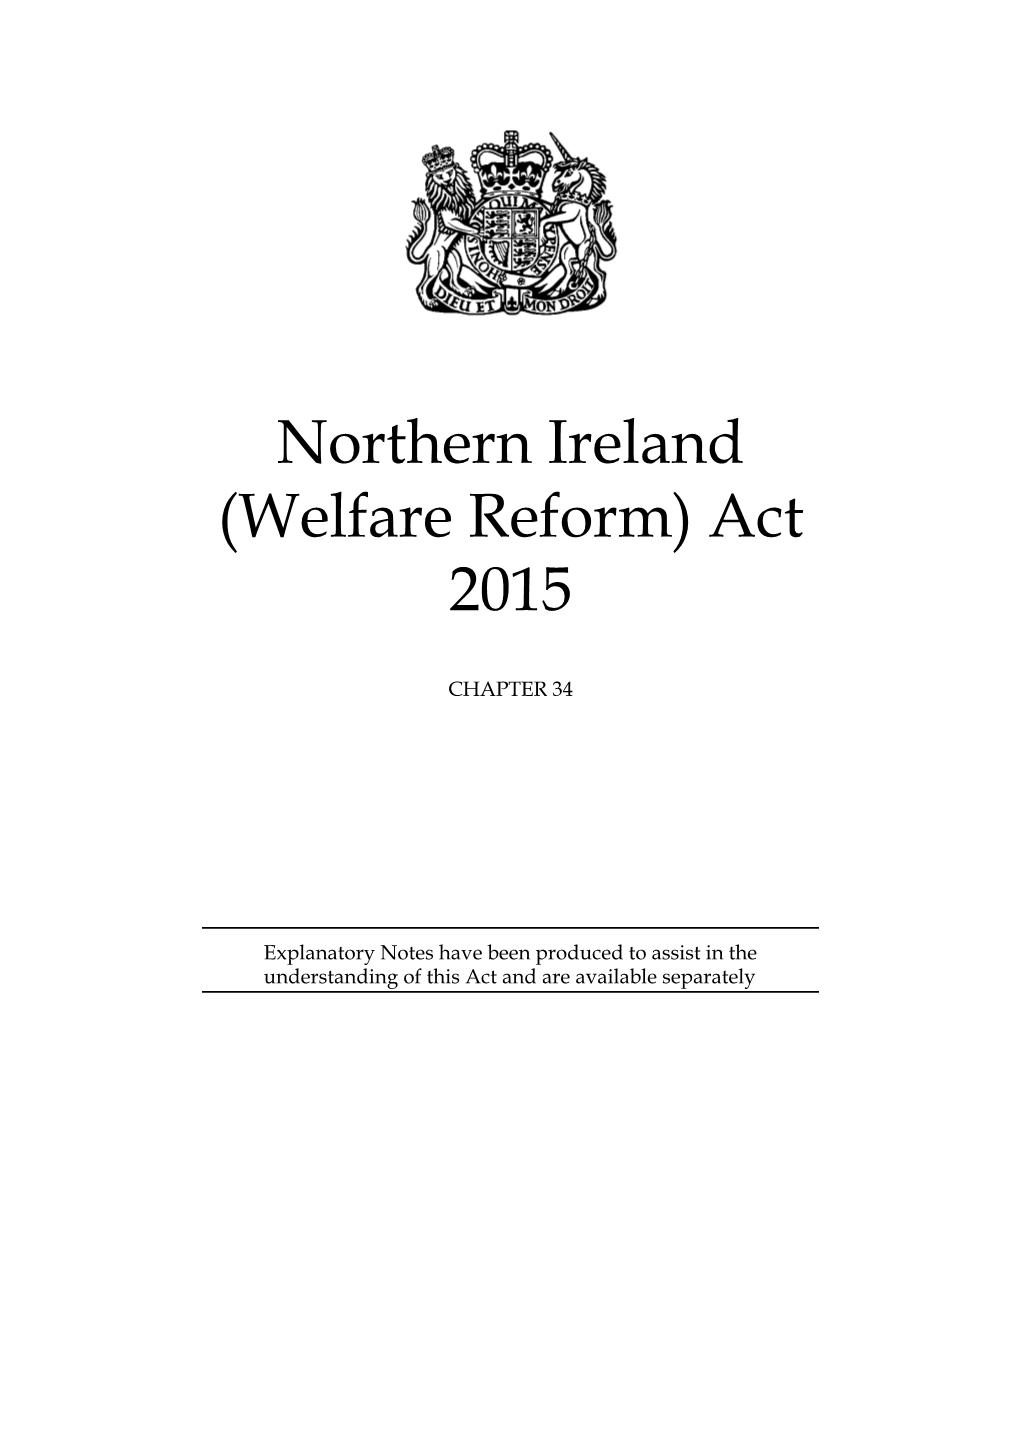 (Welfare Reform) Act 2015